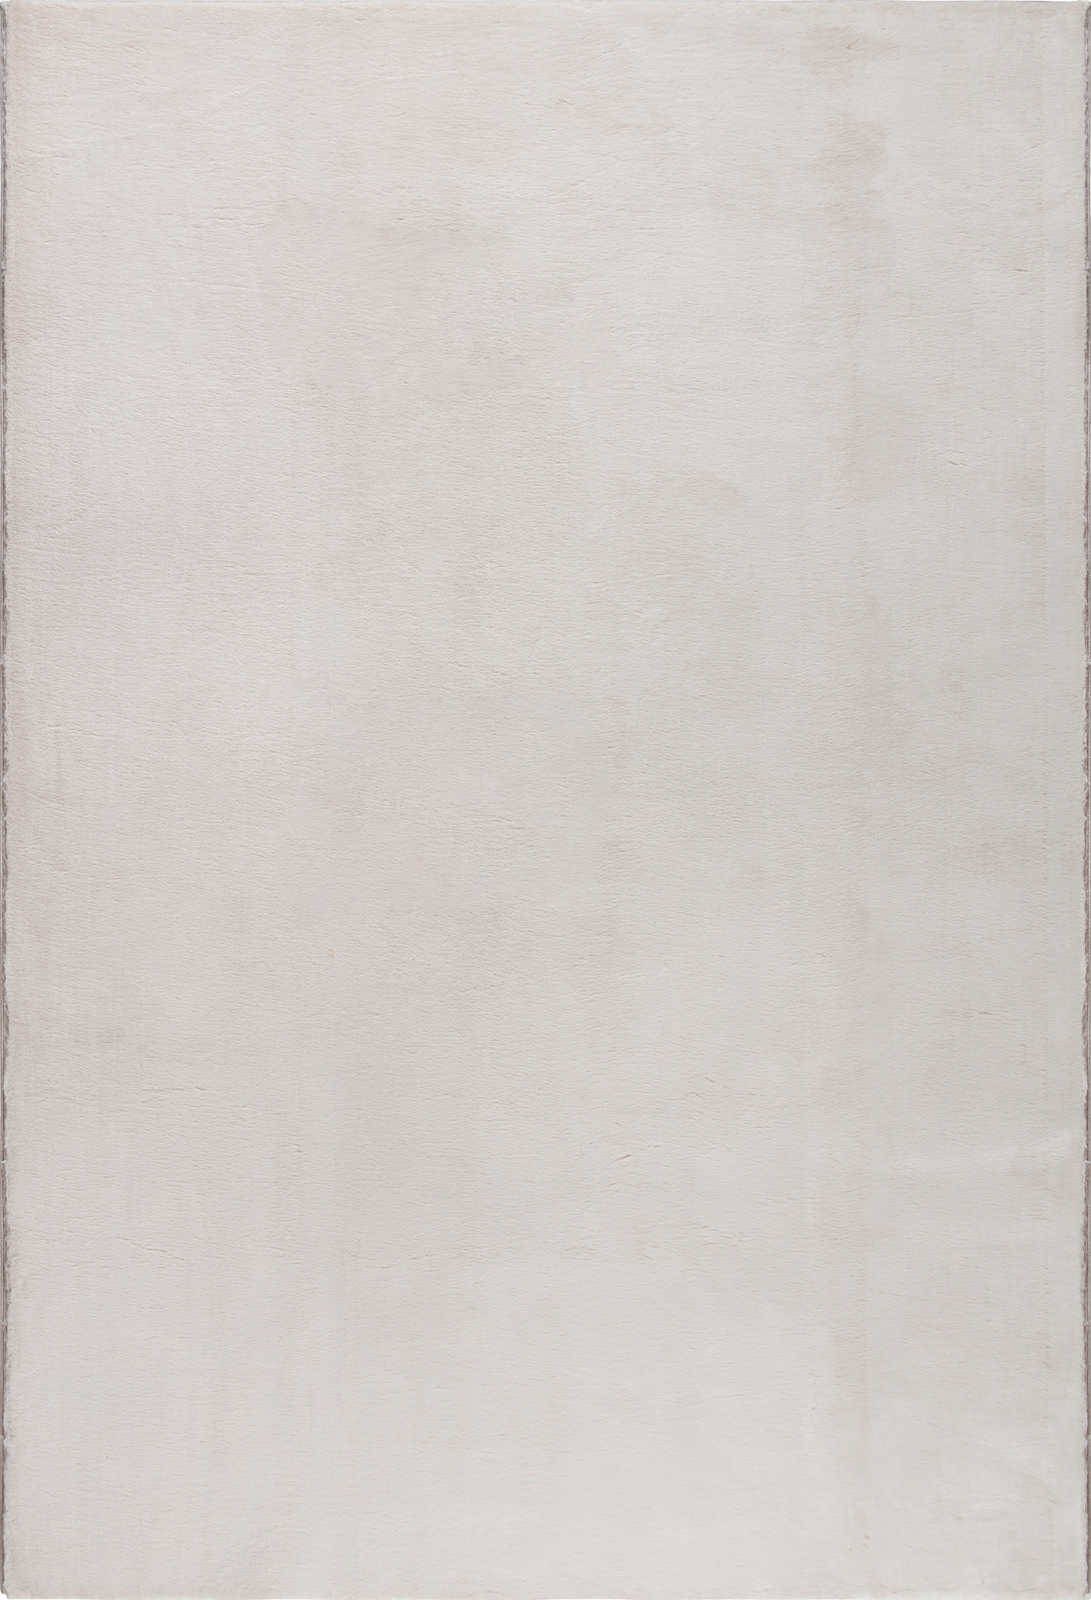             Knuffelzacht hoogpolig tapijt in lichtbeige - 170 x 120 cm
        